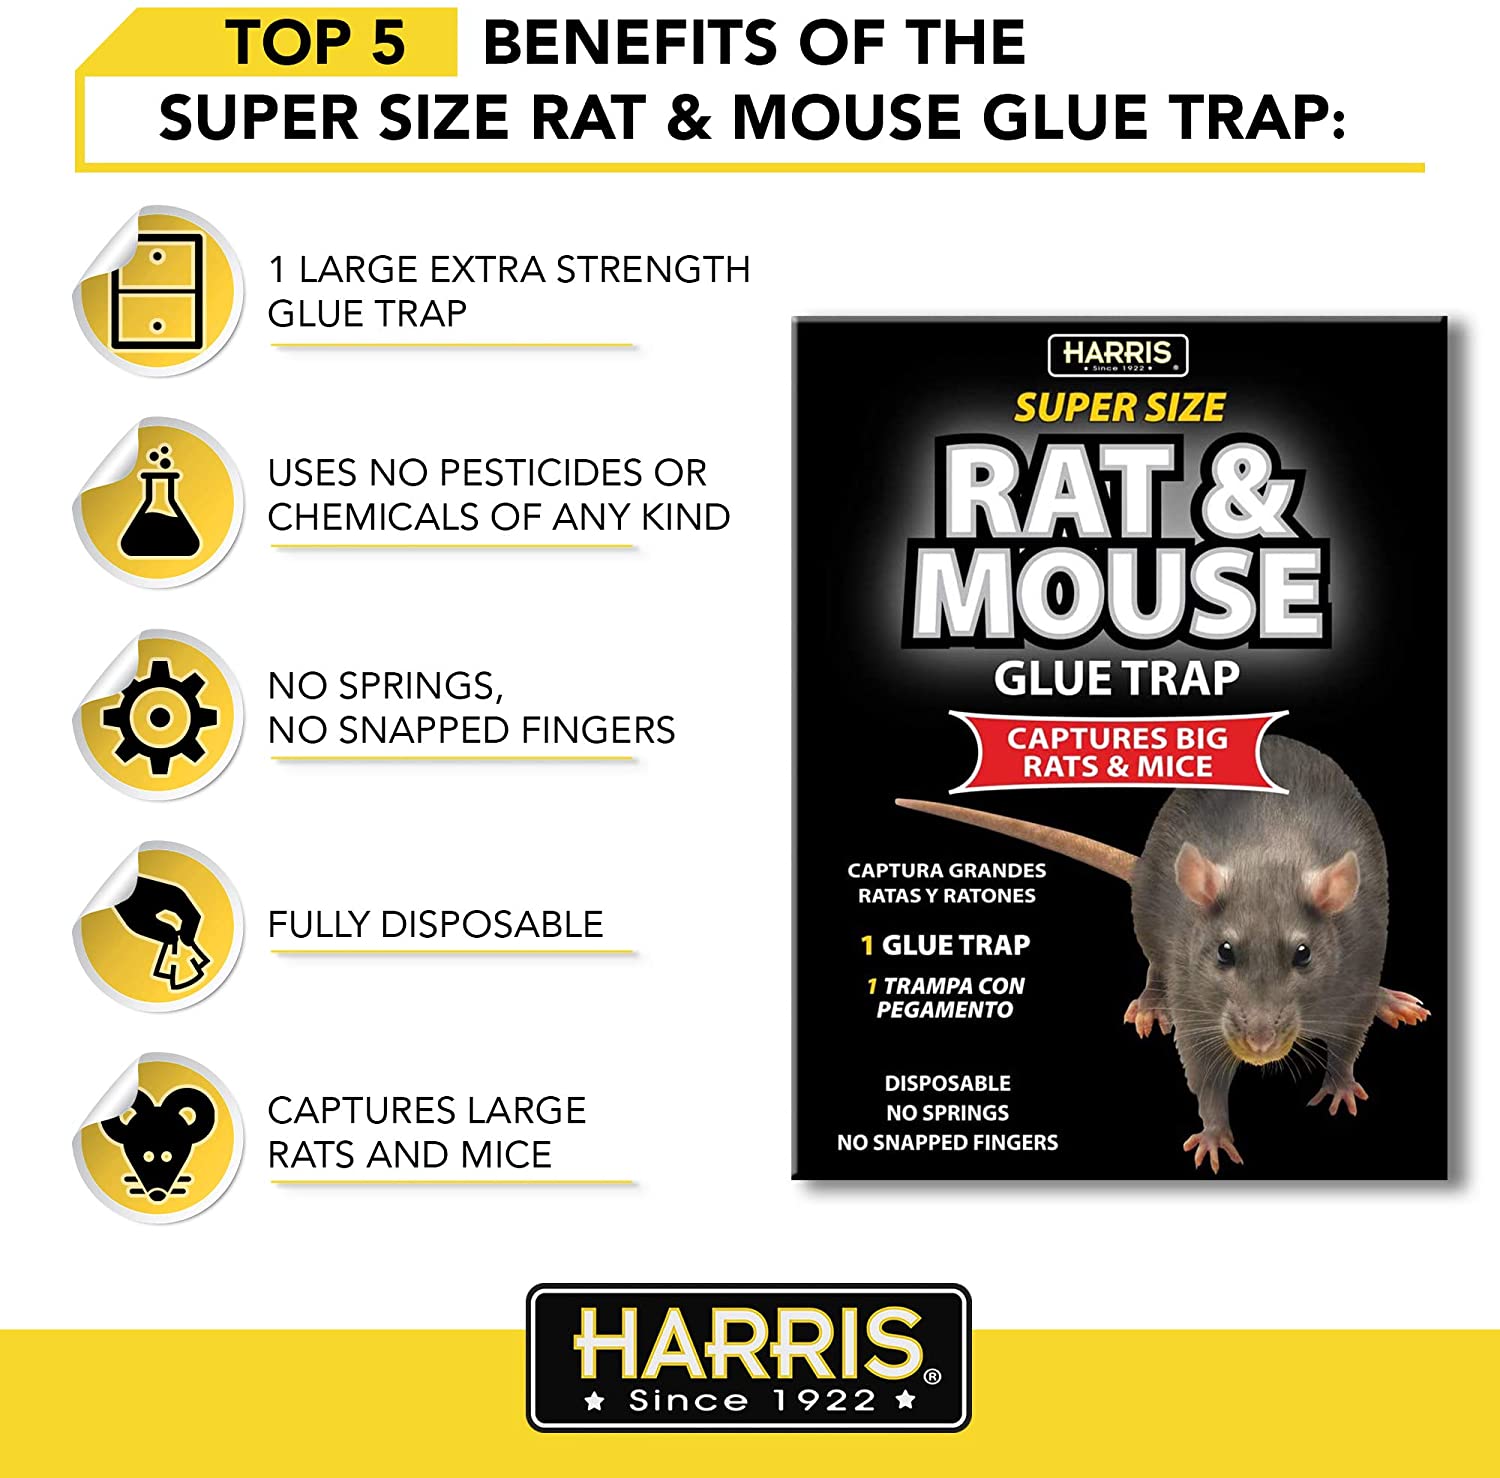 Harris Rat and Mouse Glue Trap, Super Size - PF Harris